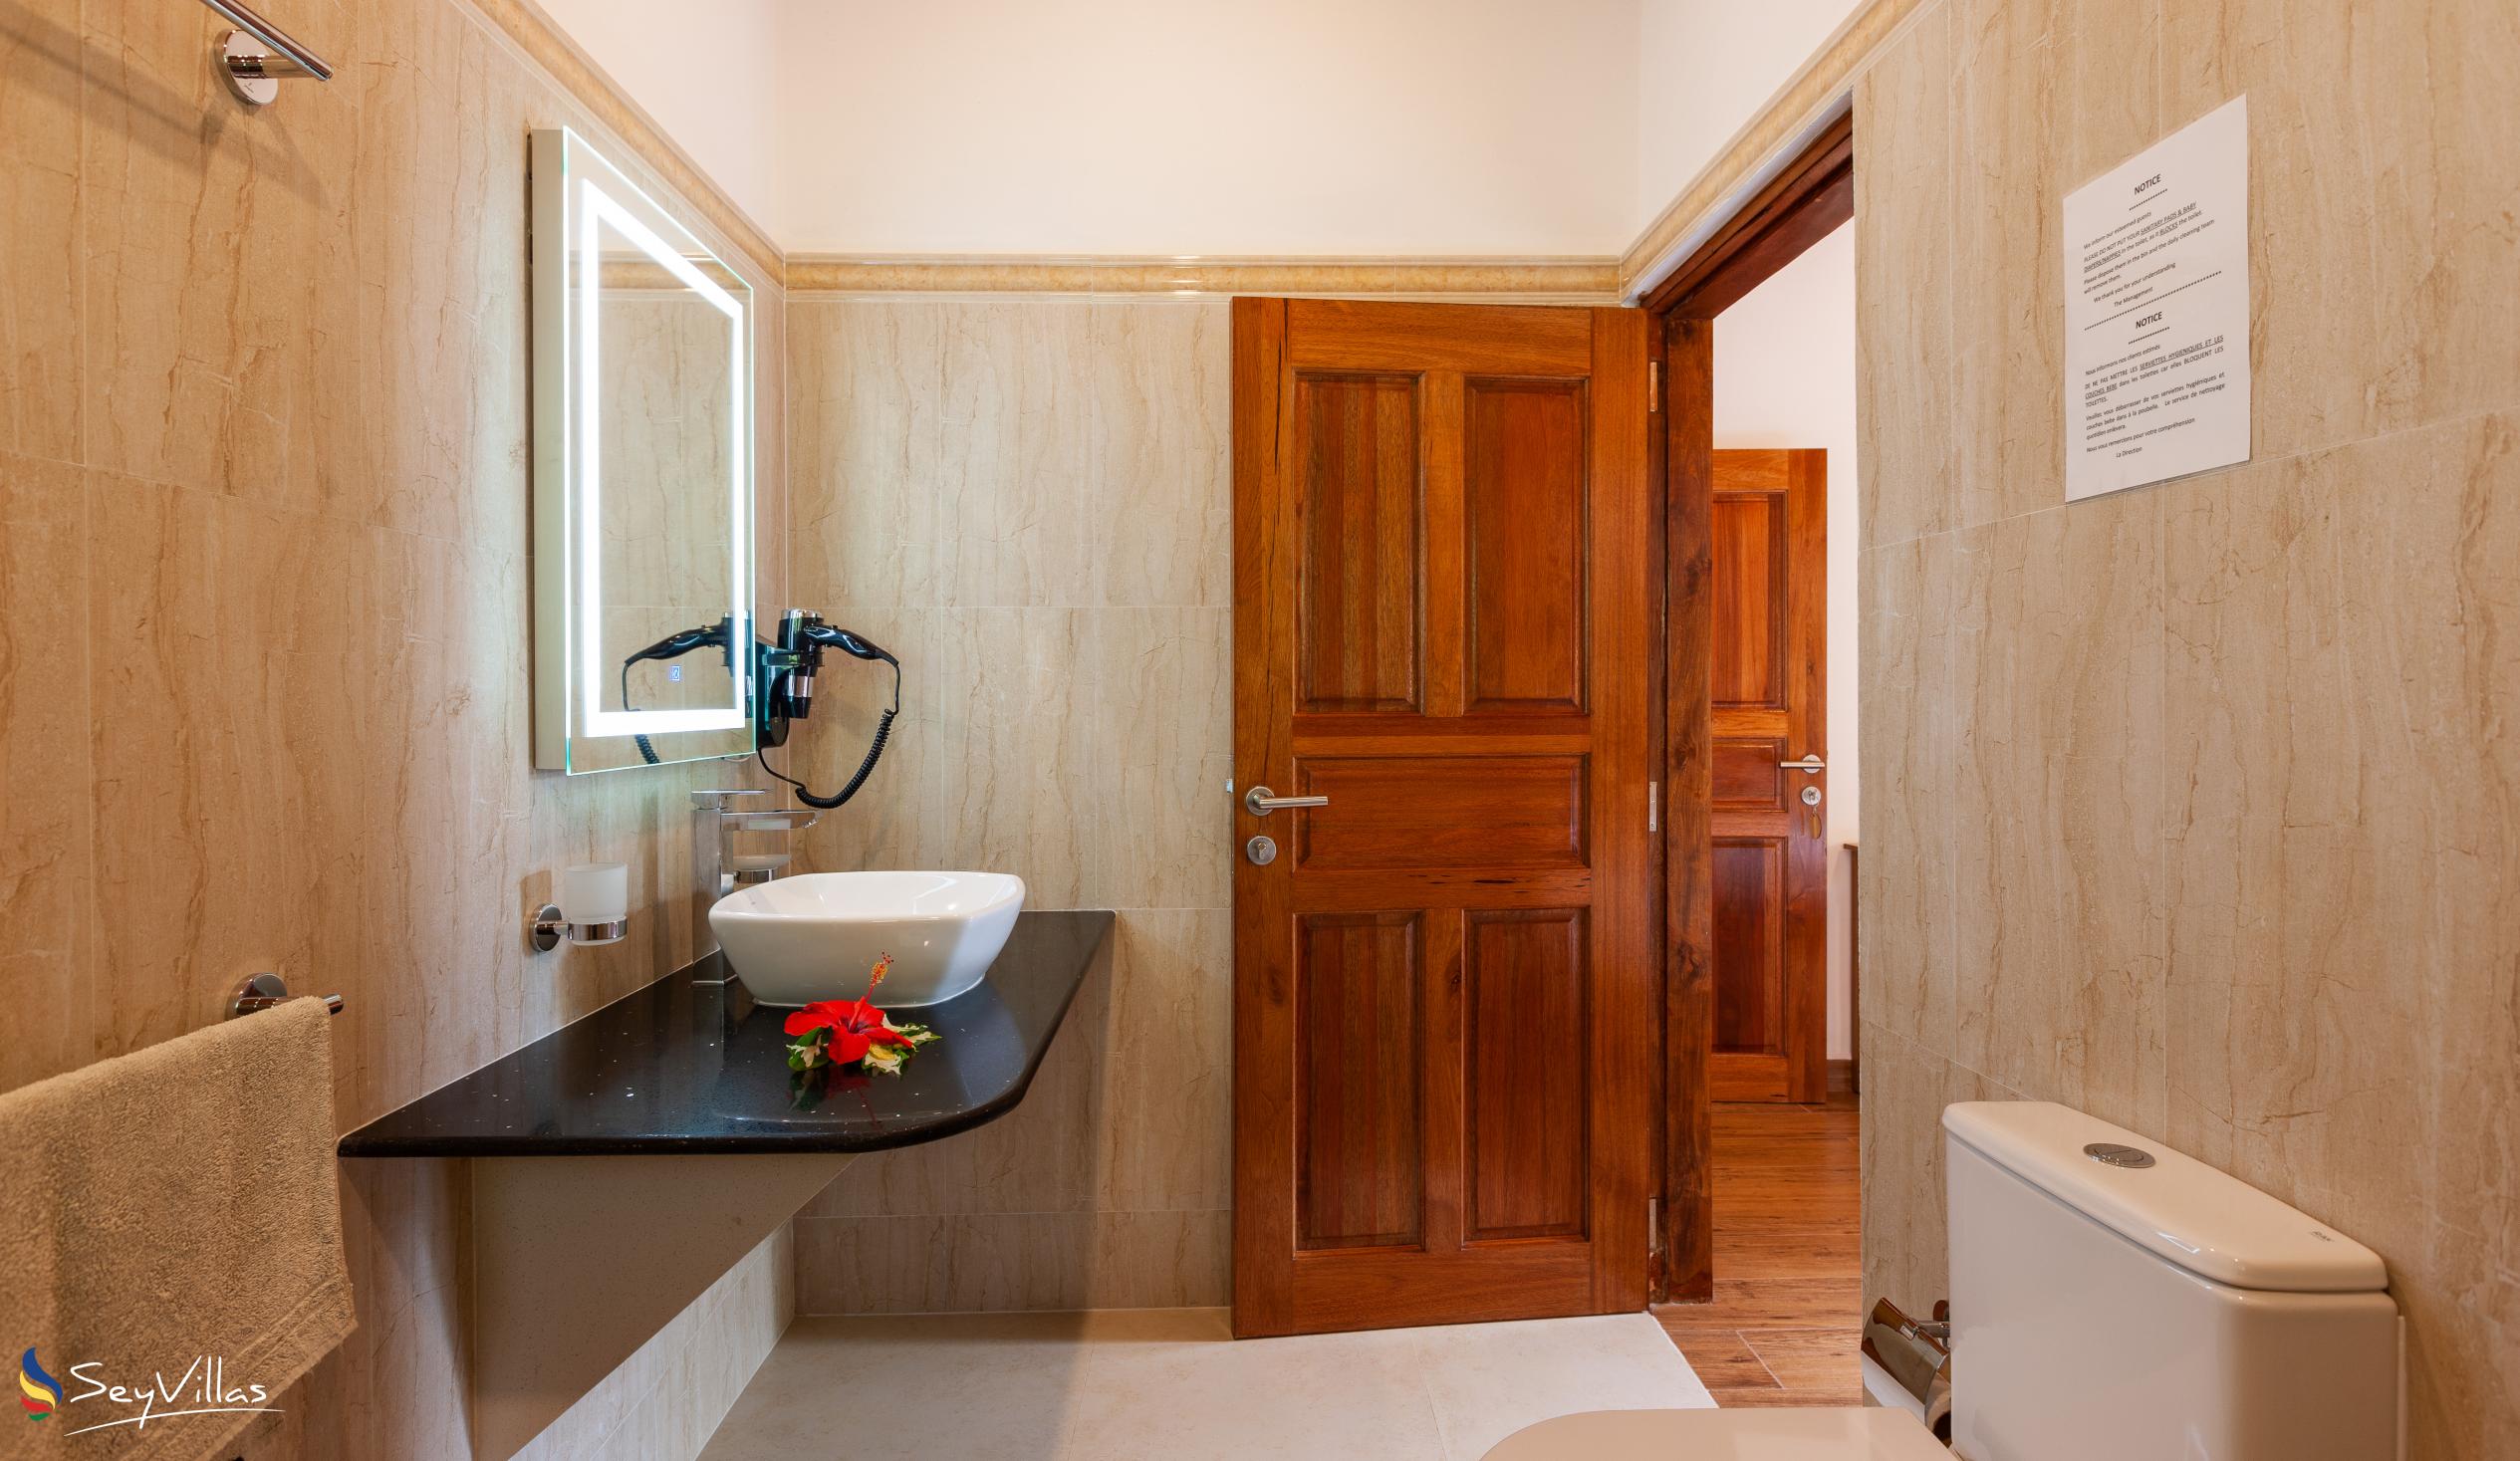 Photo 76: Le Grand Bleu Villas - 2-Bedroom Villa - Praslin (Seychelles)